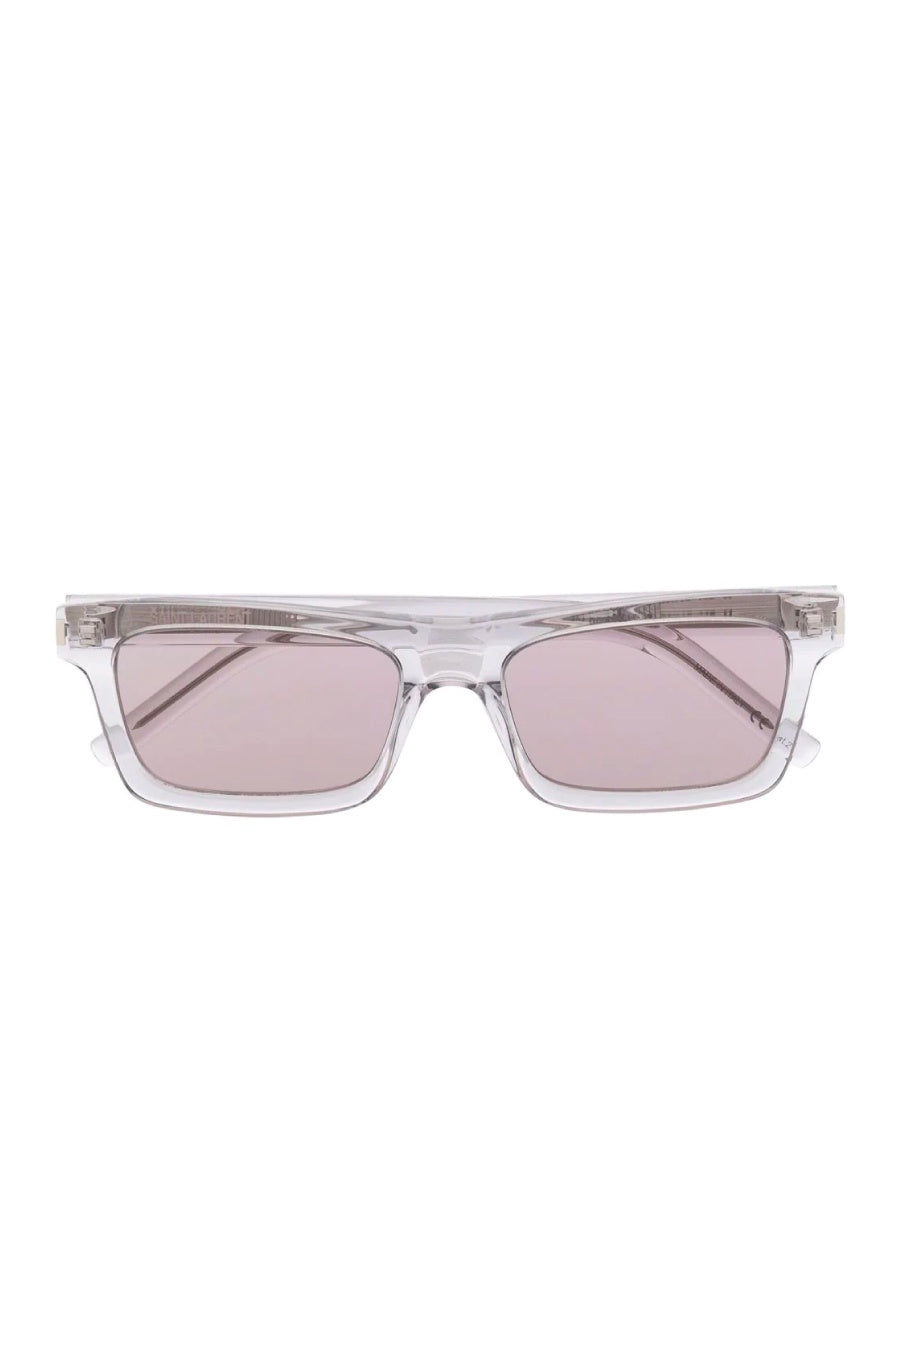 Saint Laurent Betty Sunglasses - Grey